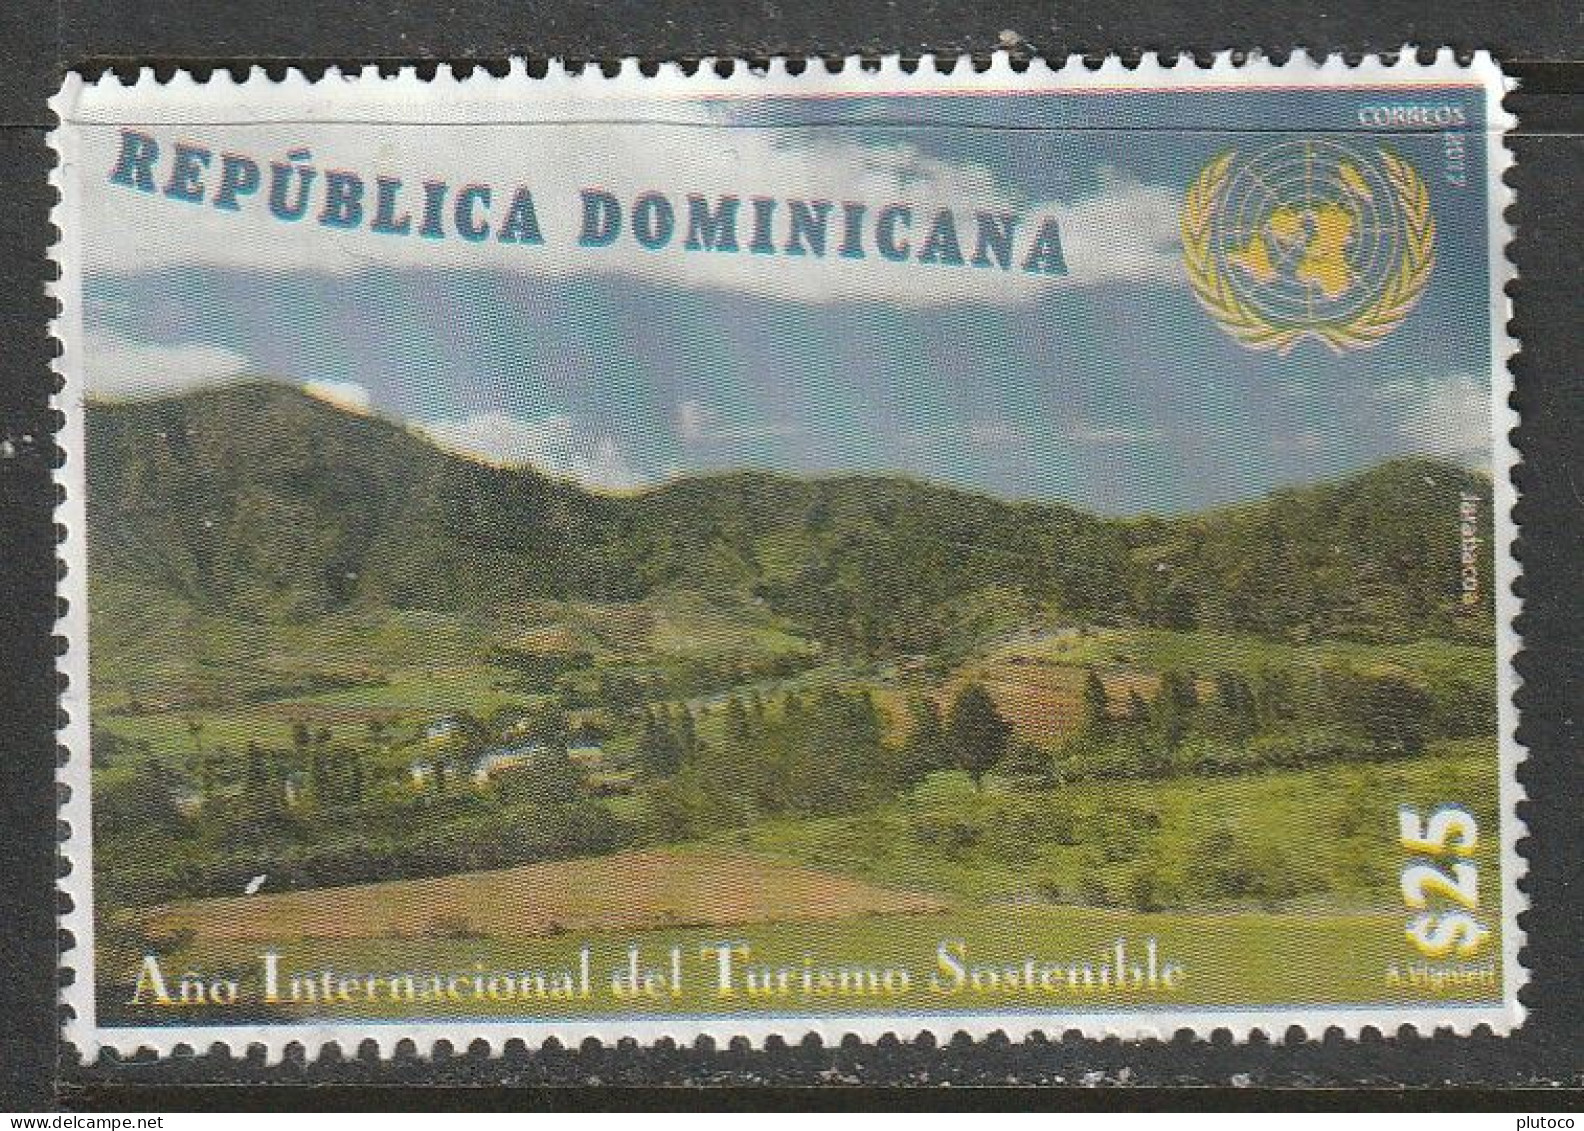 REPÚBLICA DOMINICANA, USED STAMP, OBLITERÉ, SELLO USADO - Dominican Republic